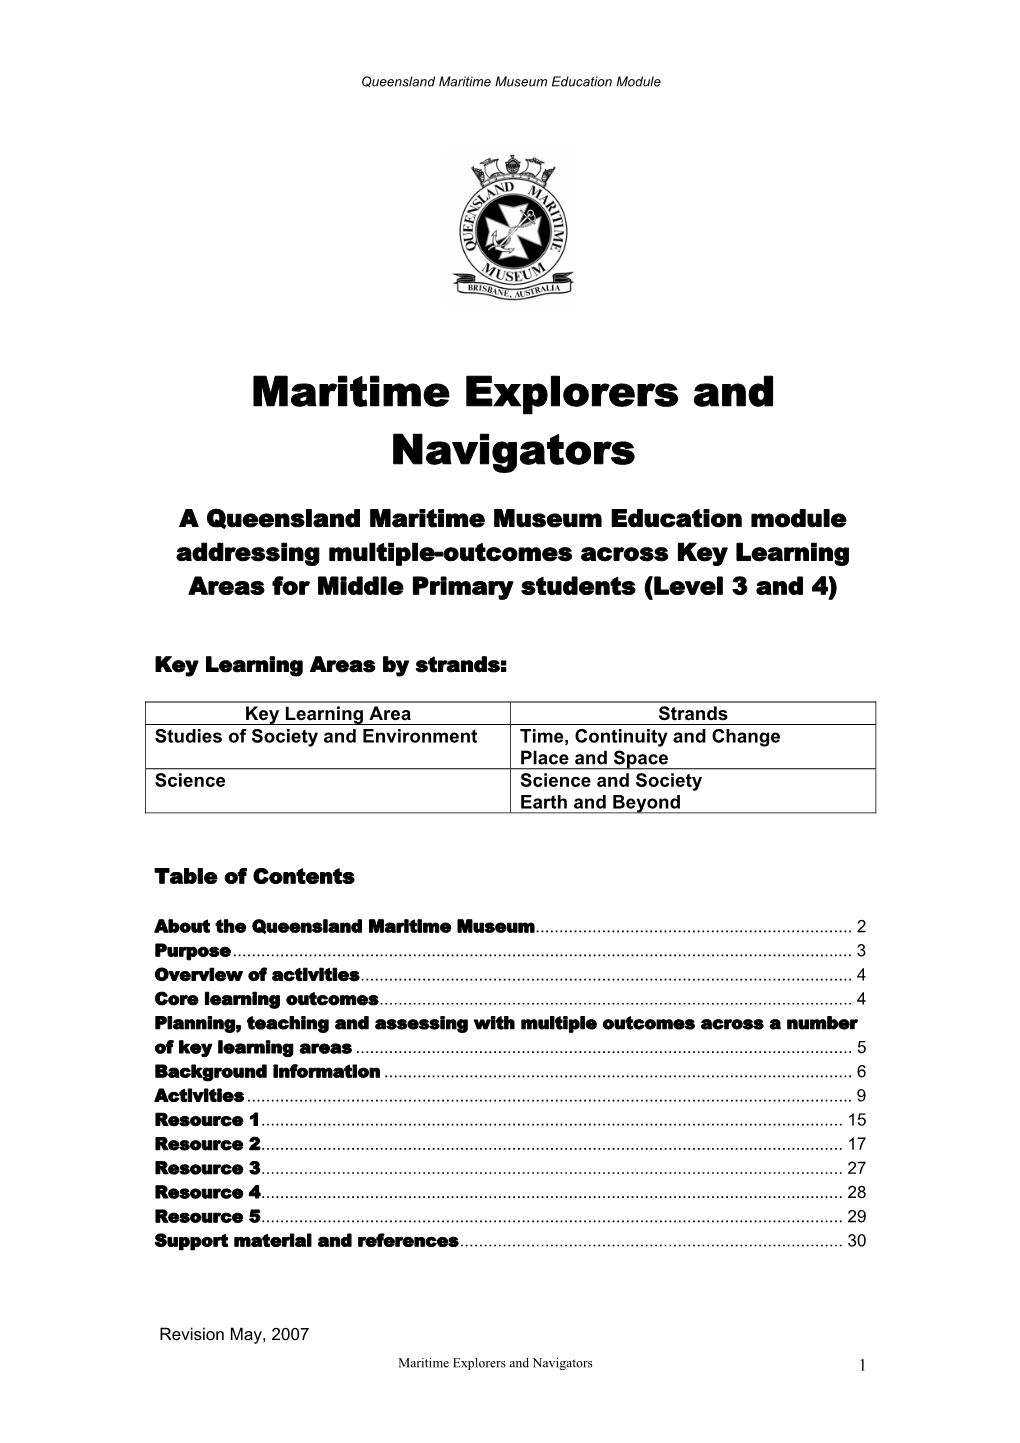 Maritime Explorers and Navigators